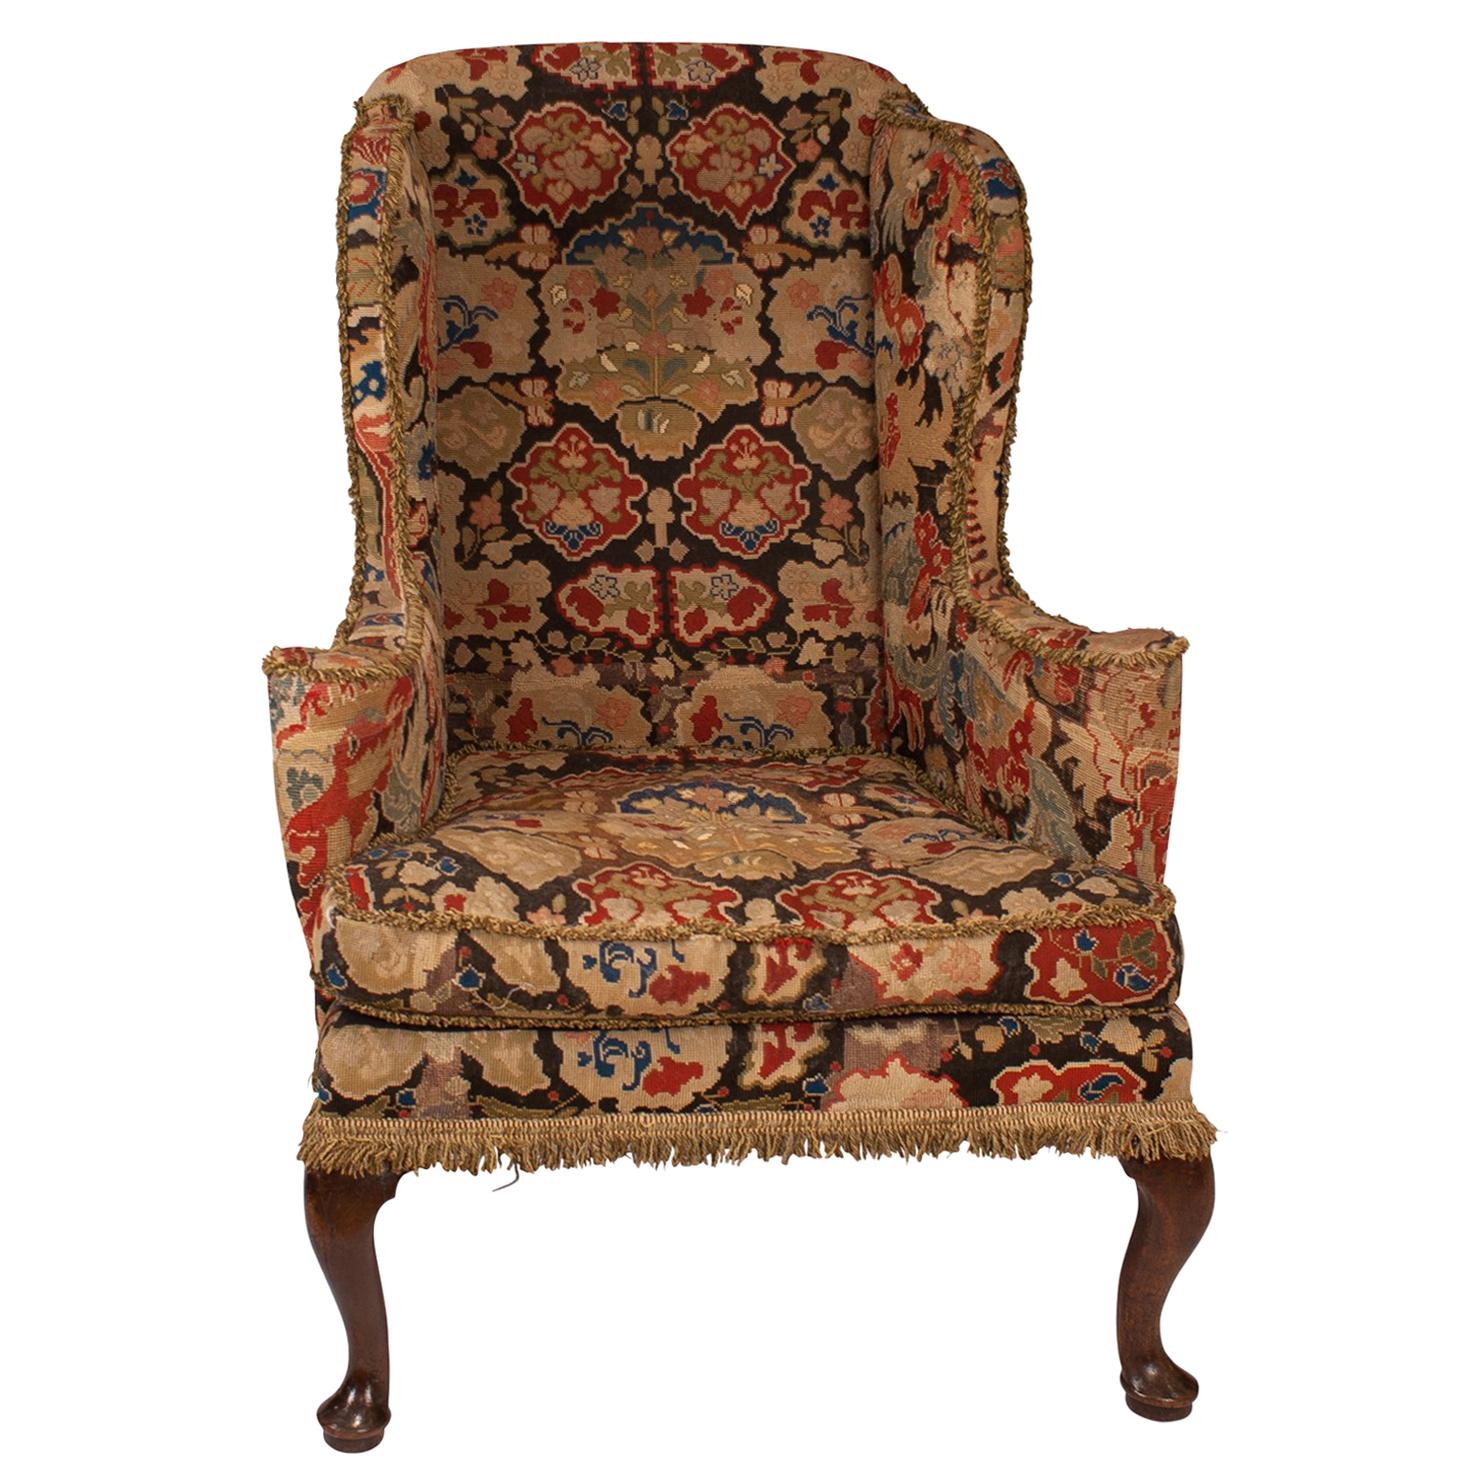 George II Wing Chair, England, circa 1750